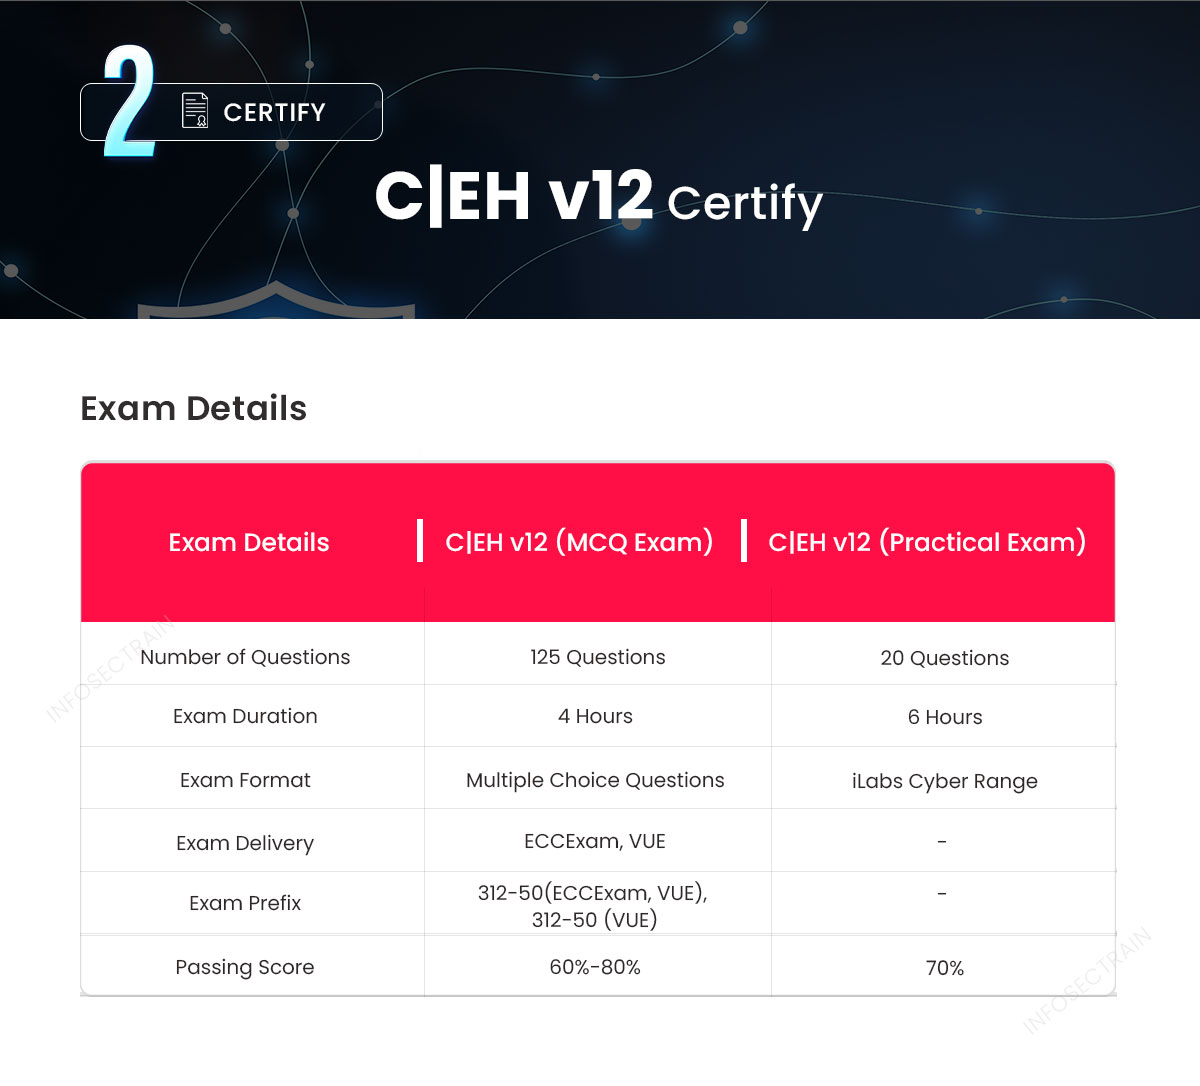 CEH-v12 CERTIFY